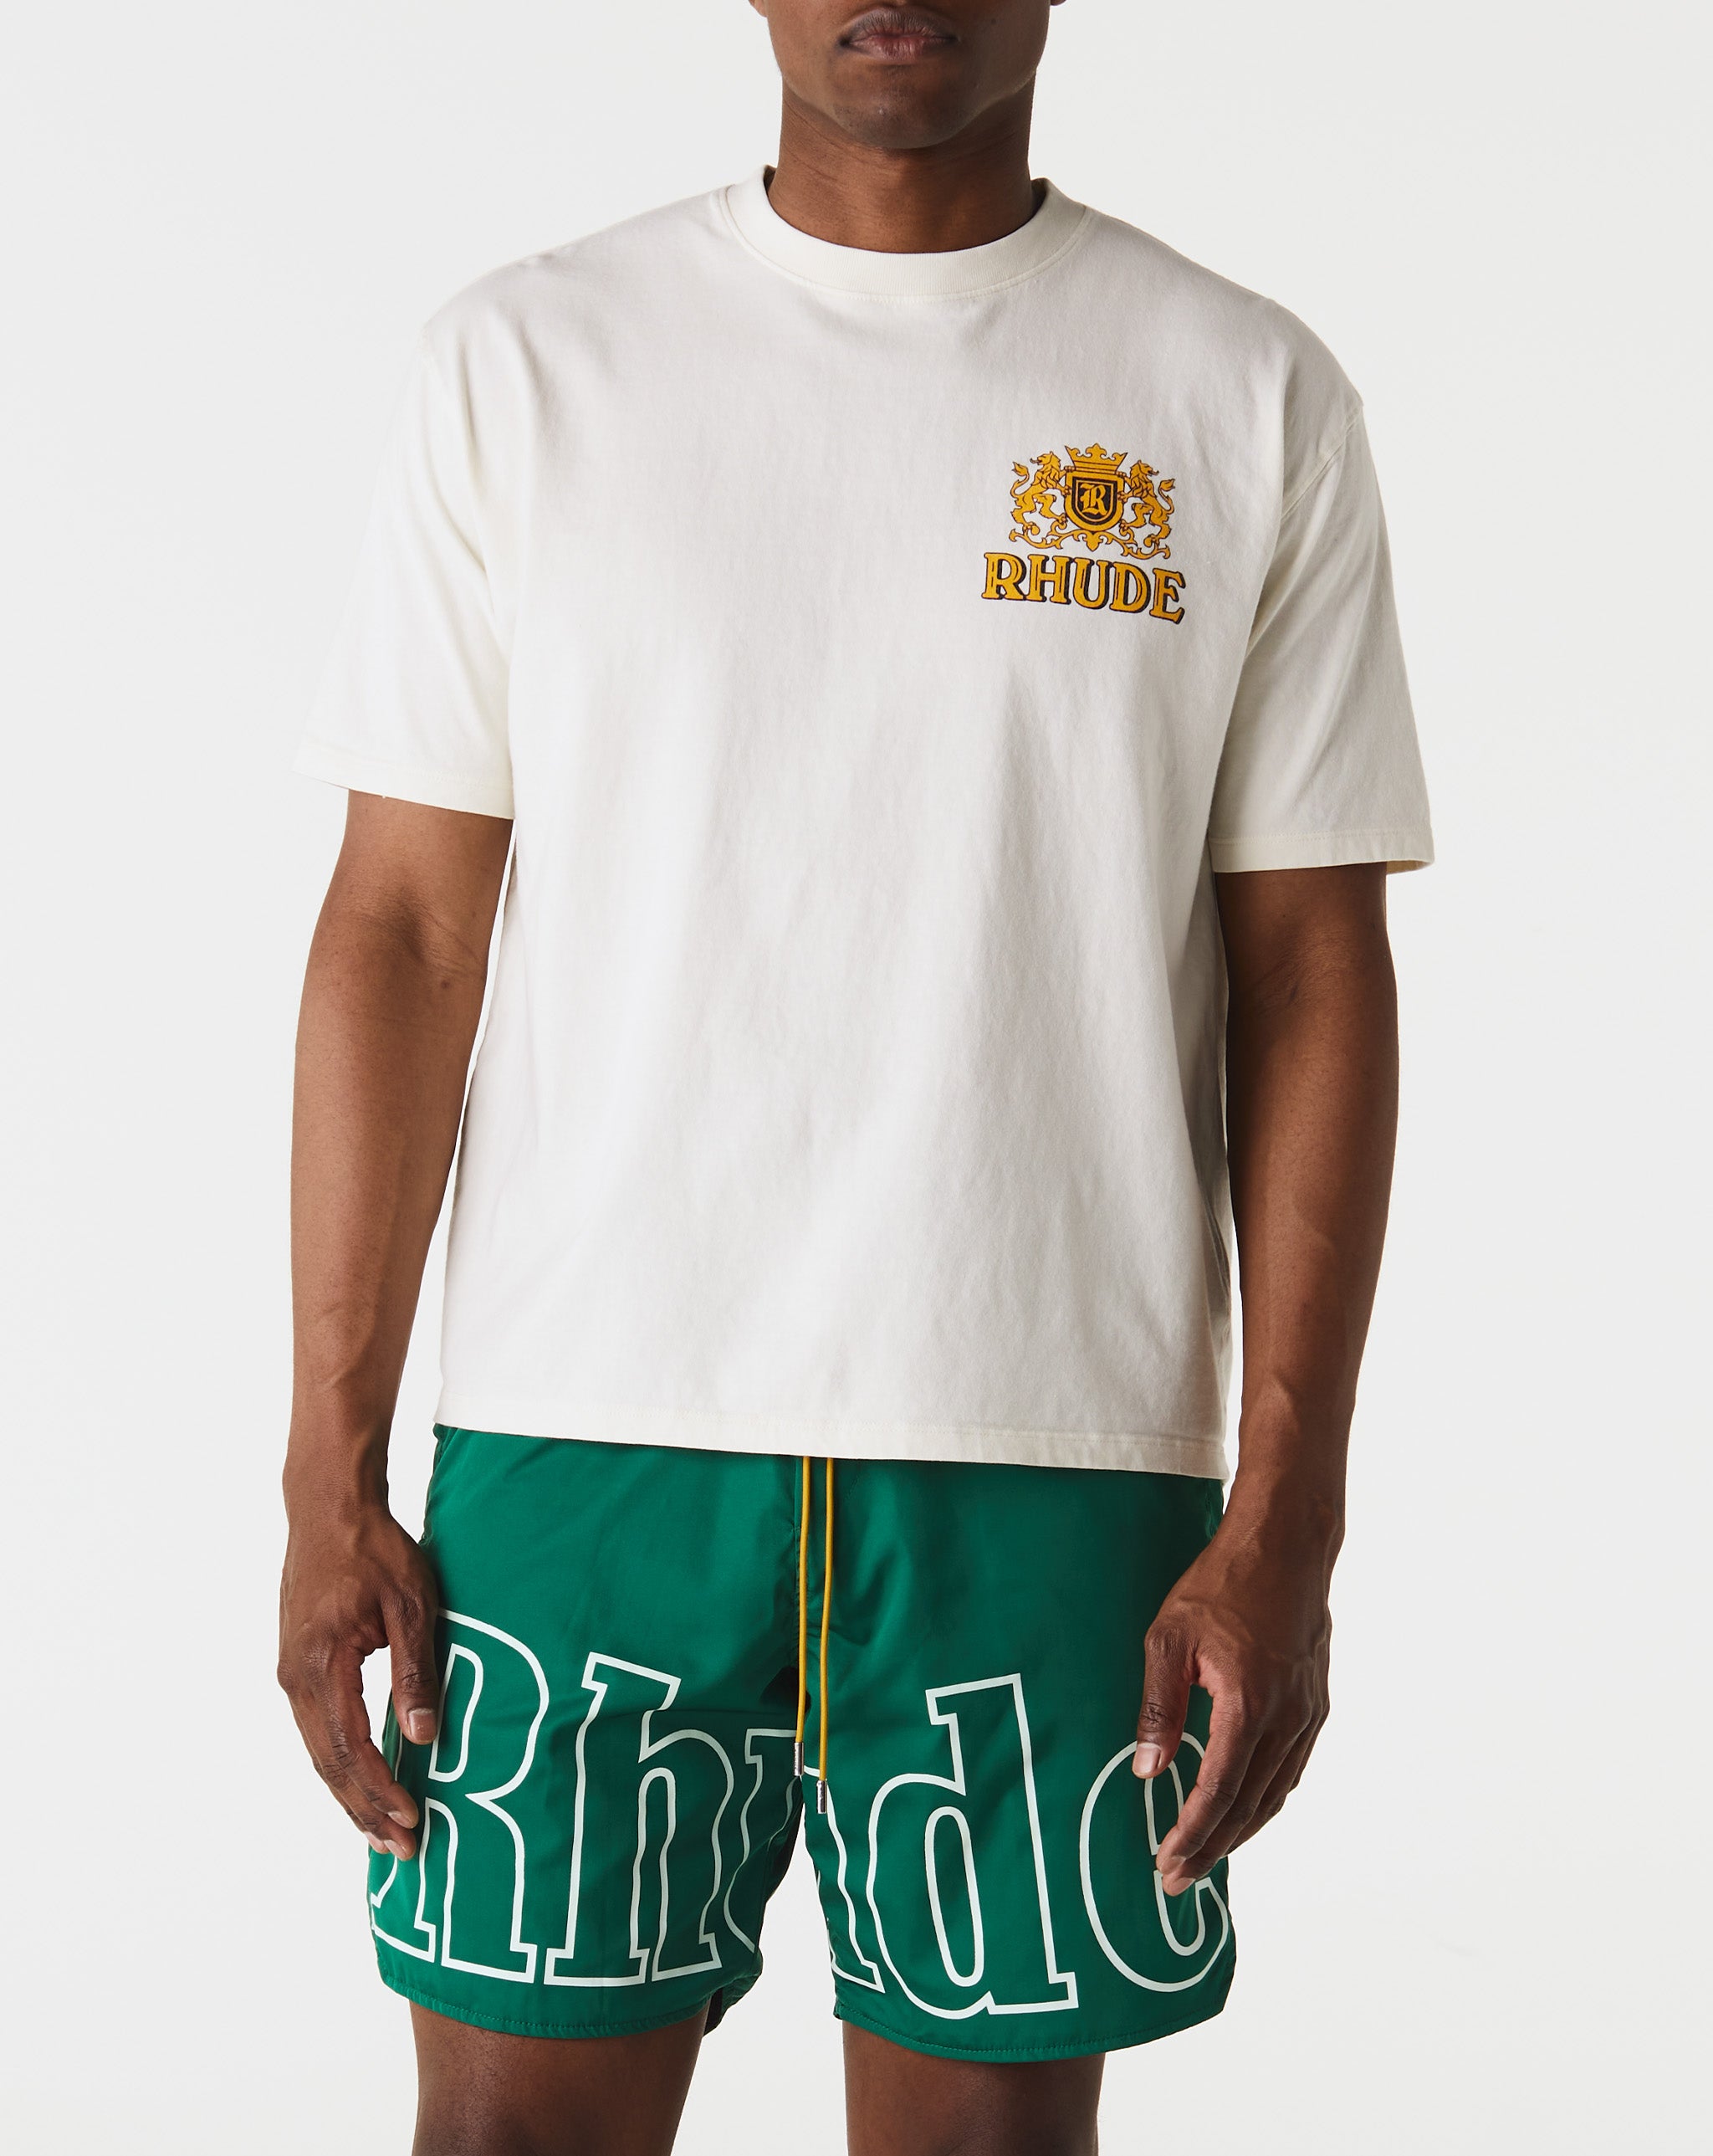 Rhude Cresta Cigar T-Shirt  - XHIBITION